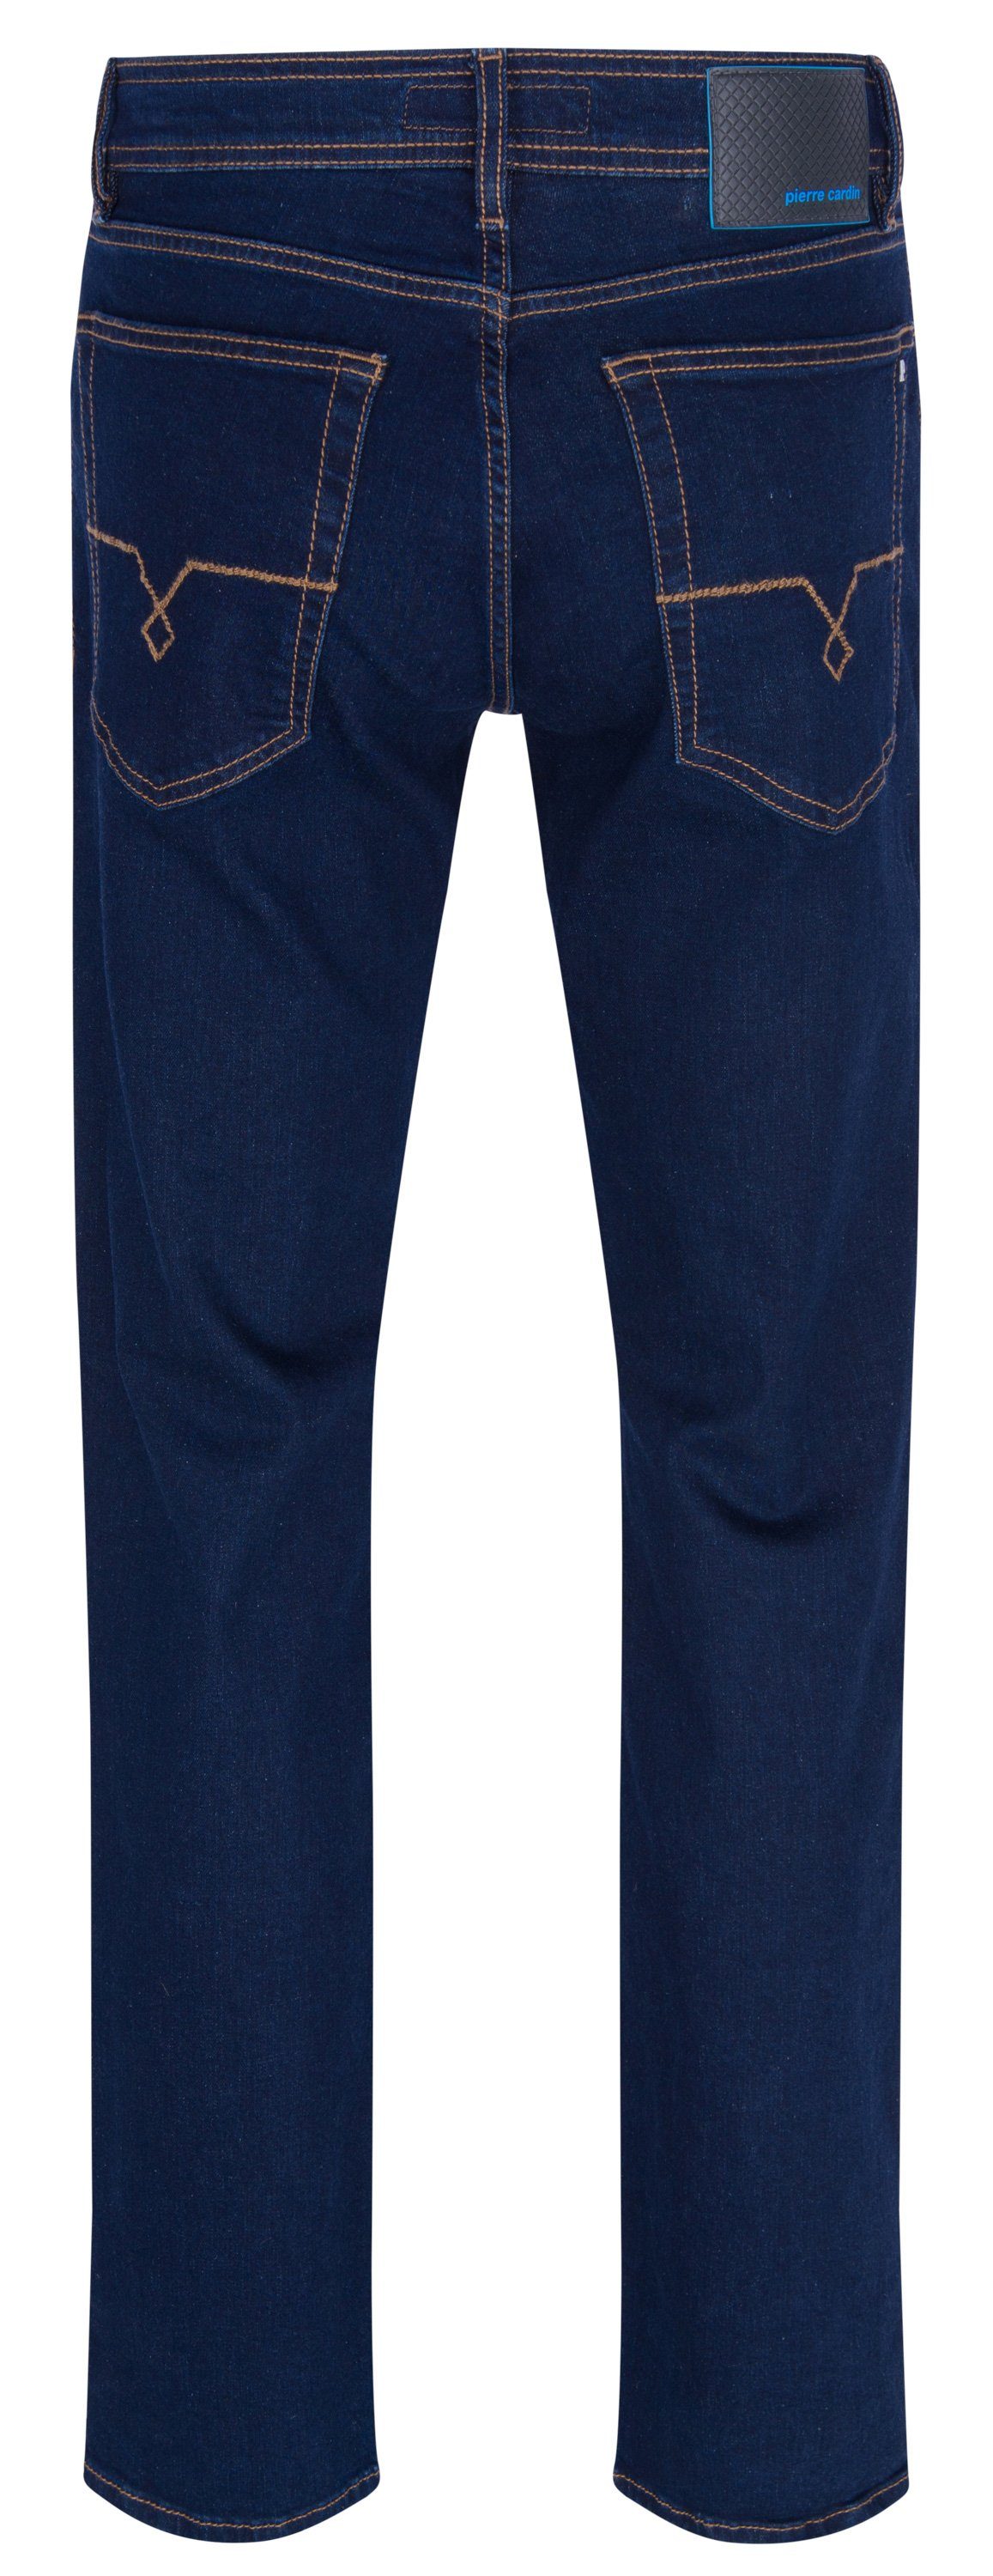 Pierre Cardin 5-Pocket-Jeans PIERRE dark CARDIN - 31960 CLIMA DEAUVILLE 7106.6811 stonewash blue